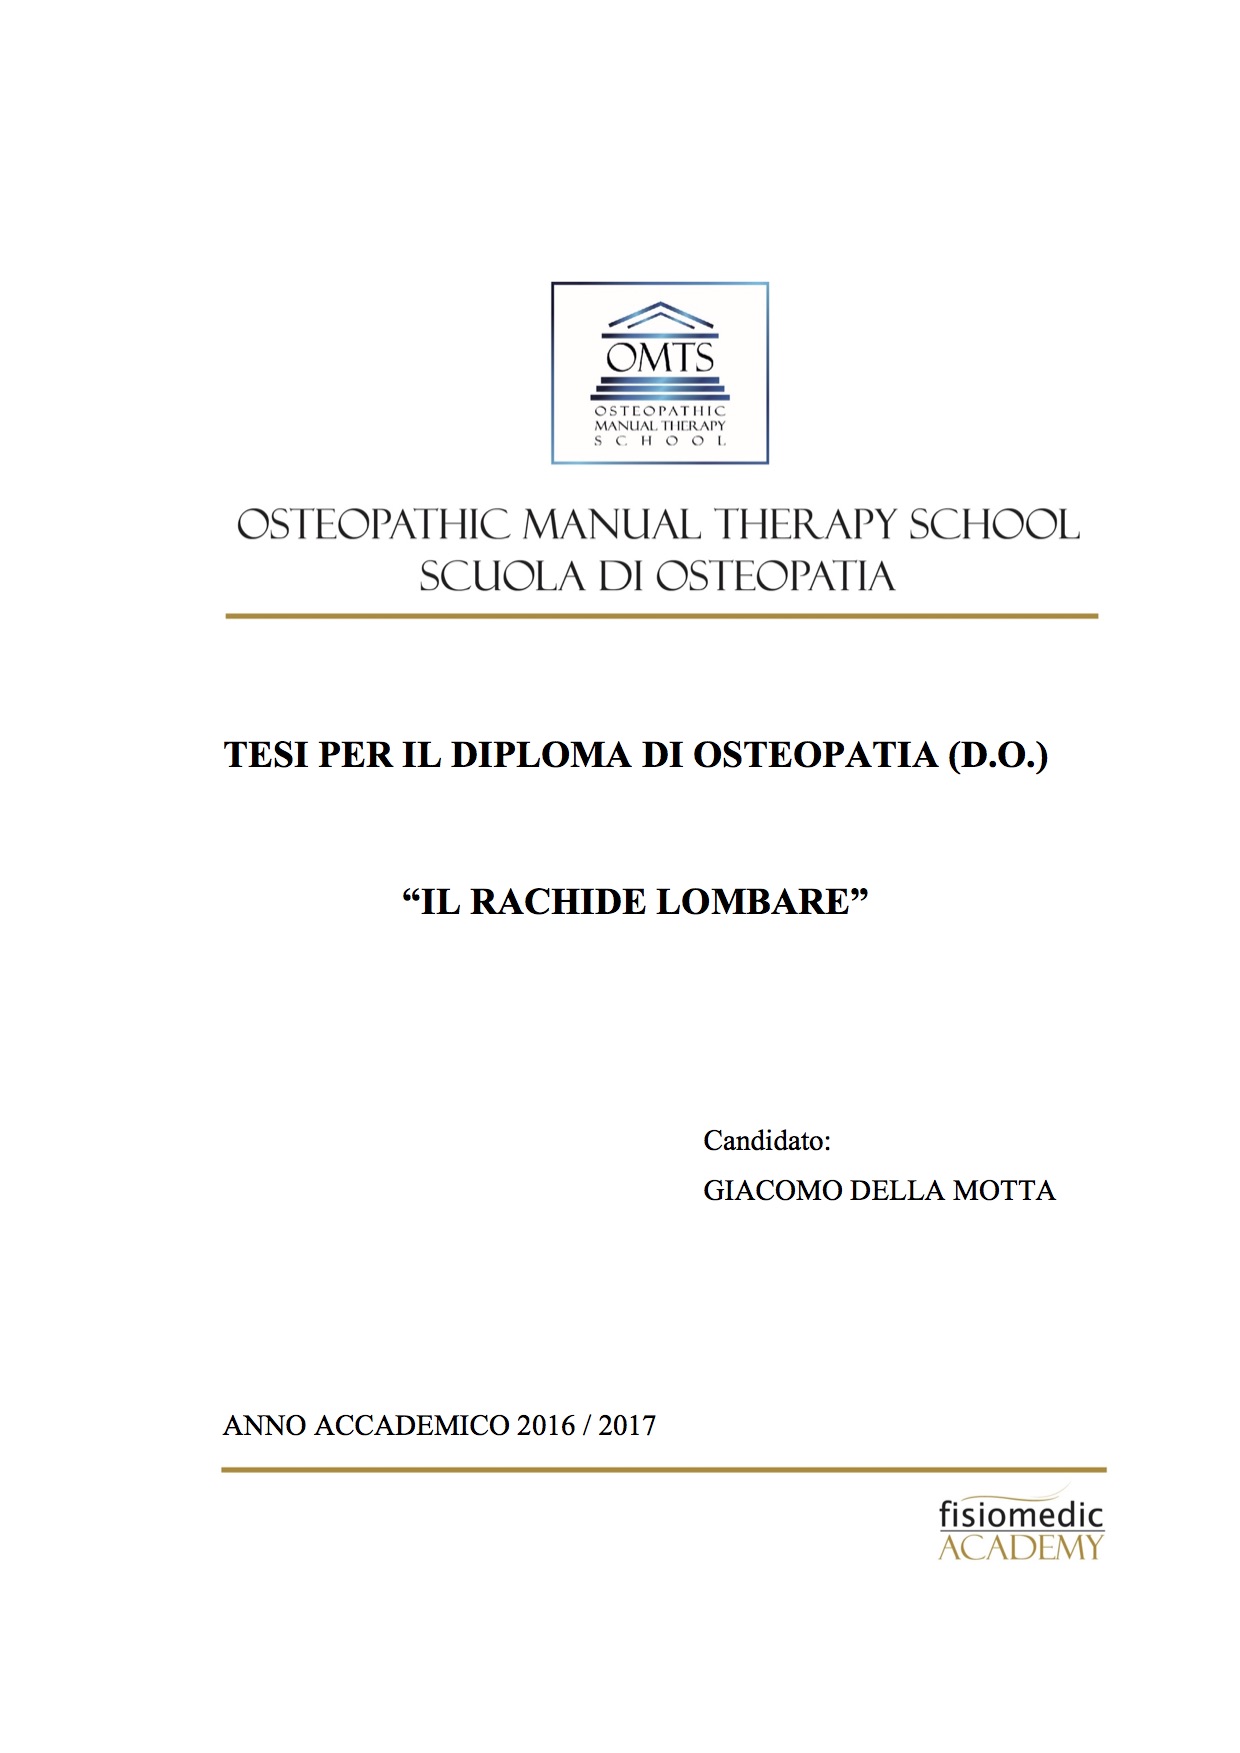 Giacomo Della Motta Tesi Diploma Osteopatia 2017